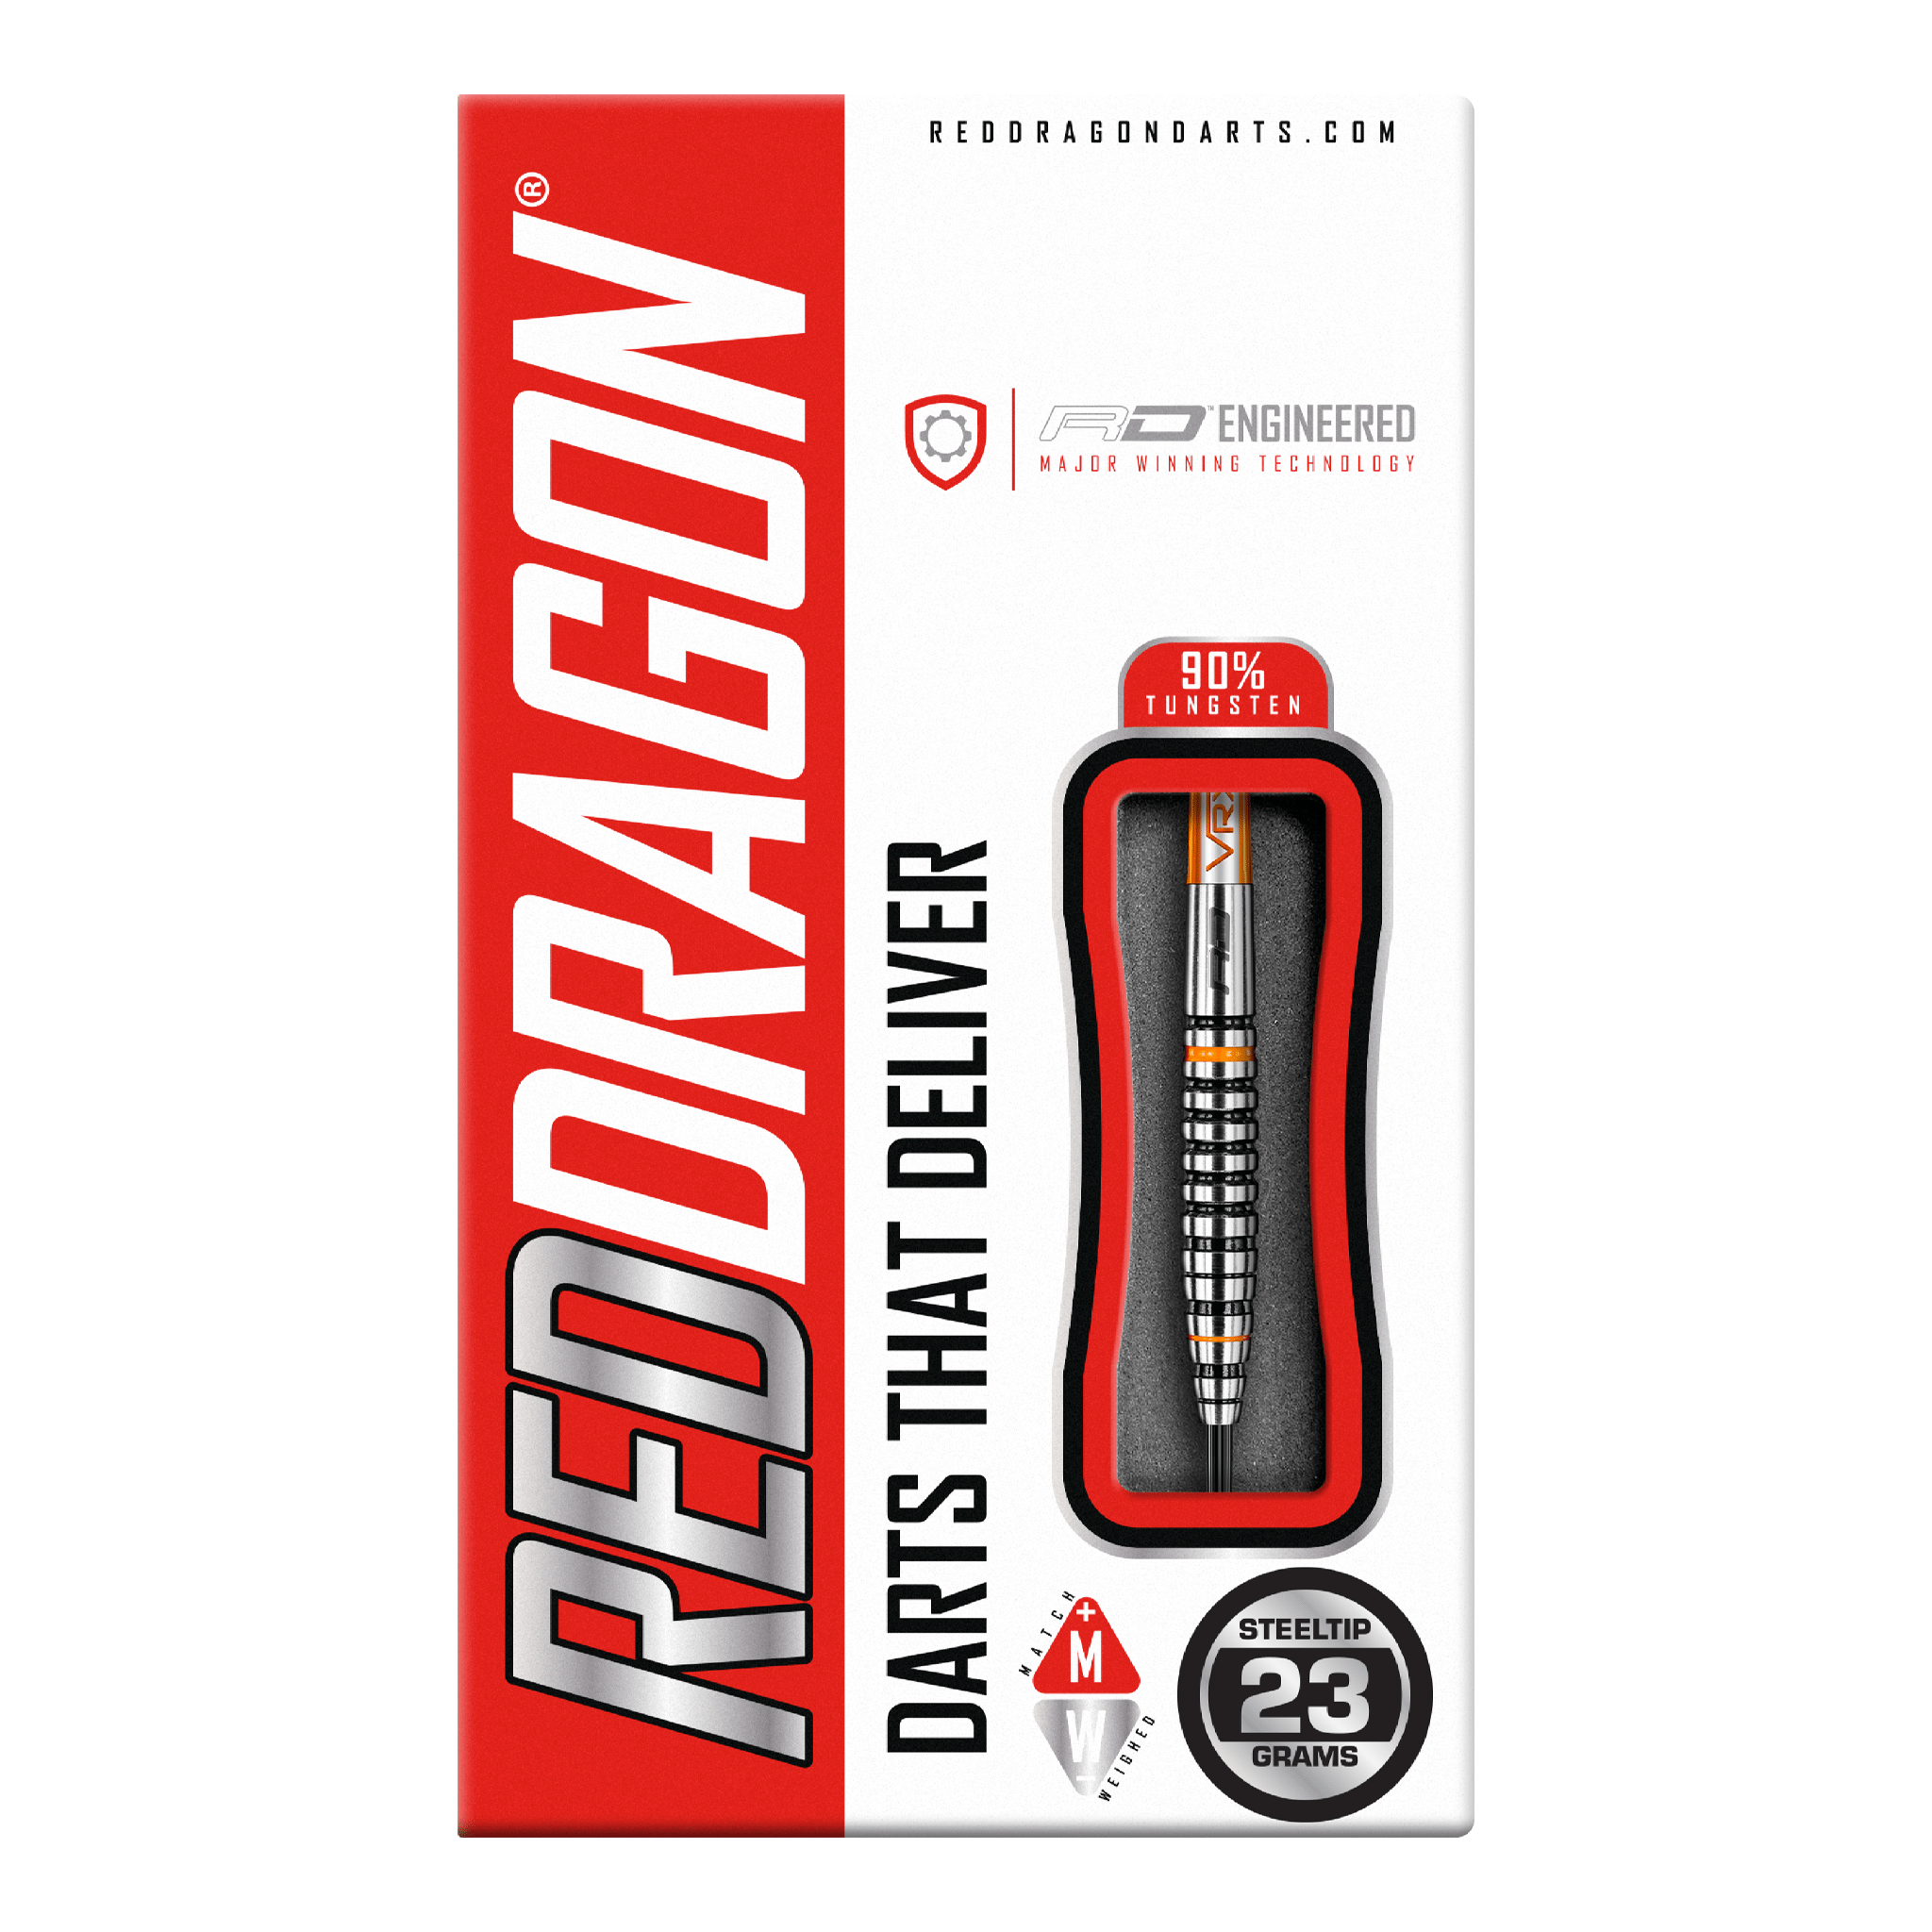 Red Dragon Amberjack 14 - 90% Tungsten Steel Tip Darts Darts